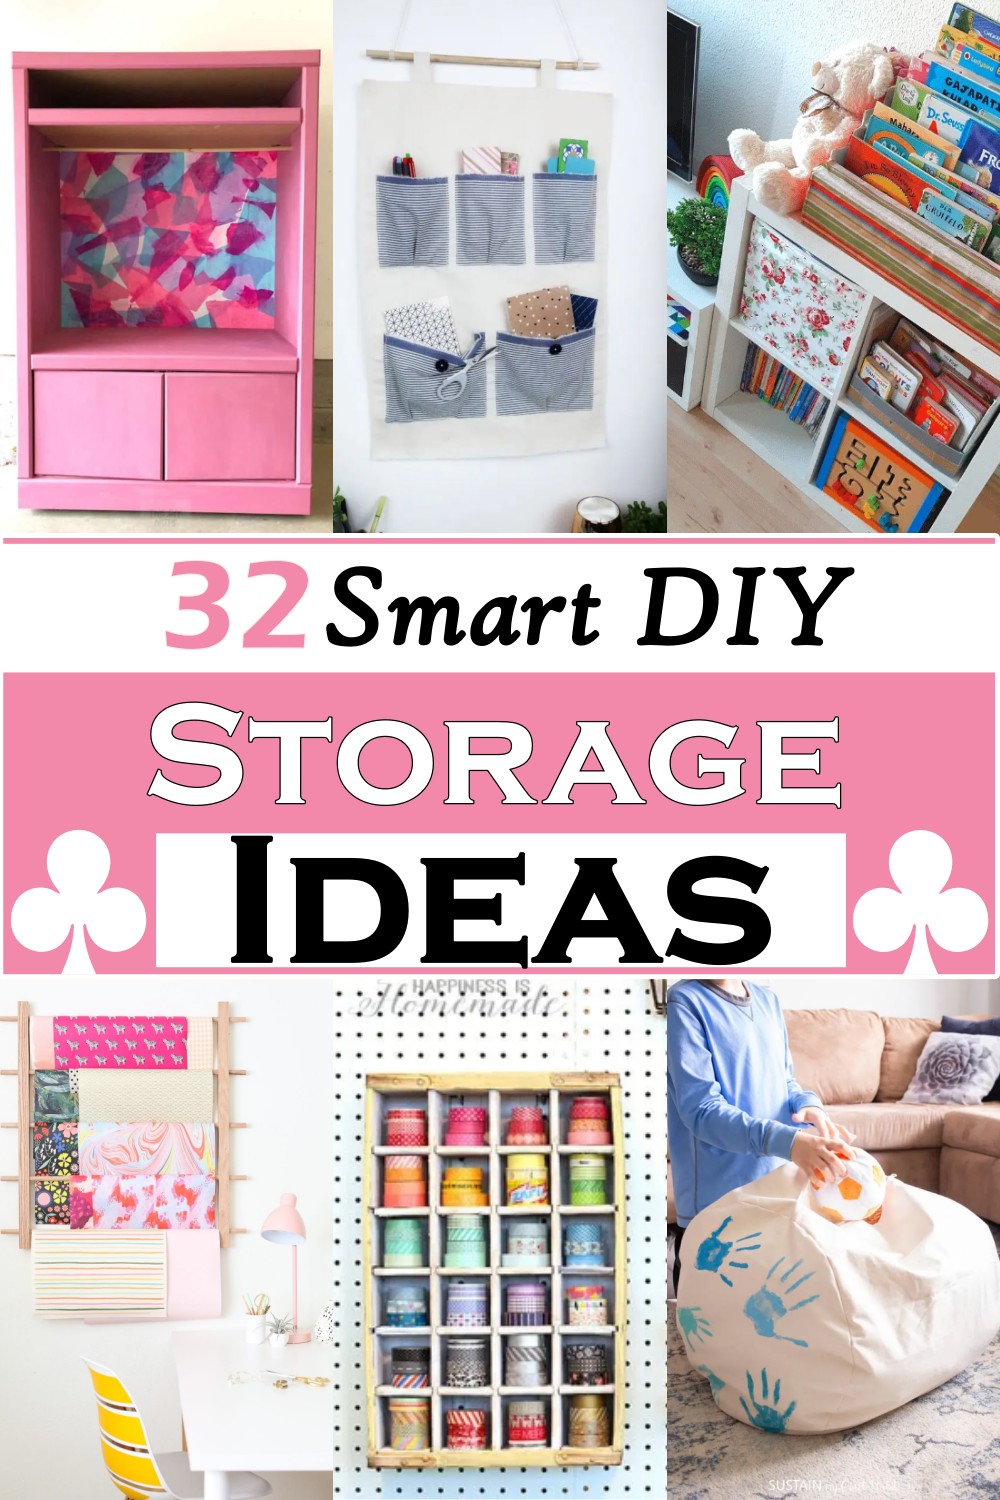 Smart DIY Storage Ideas 1